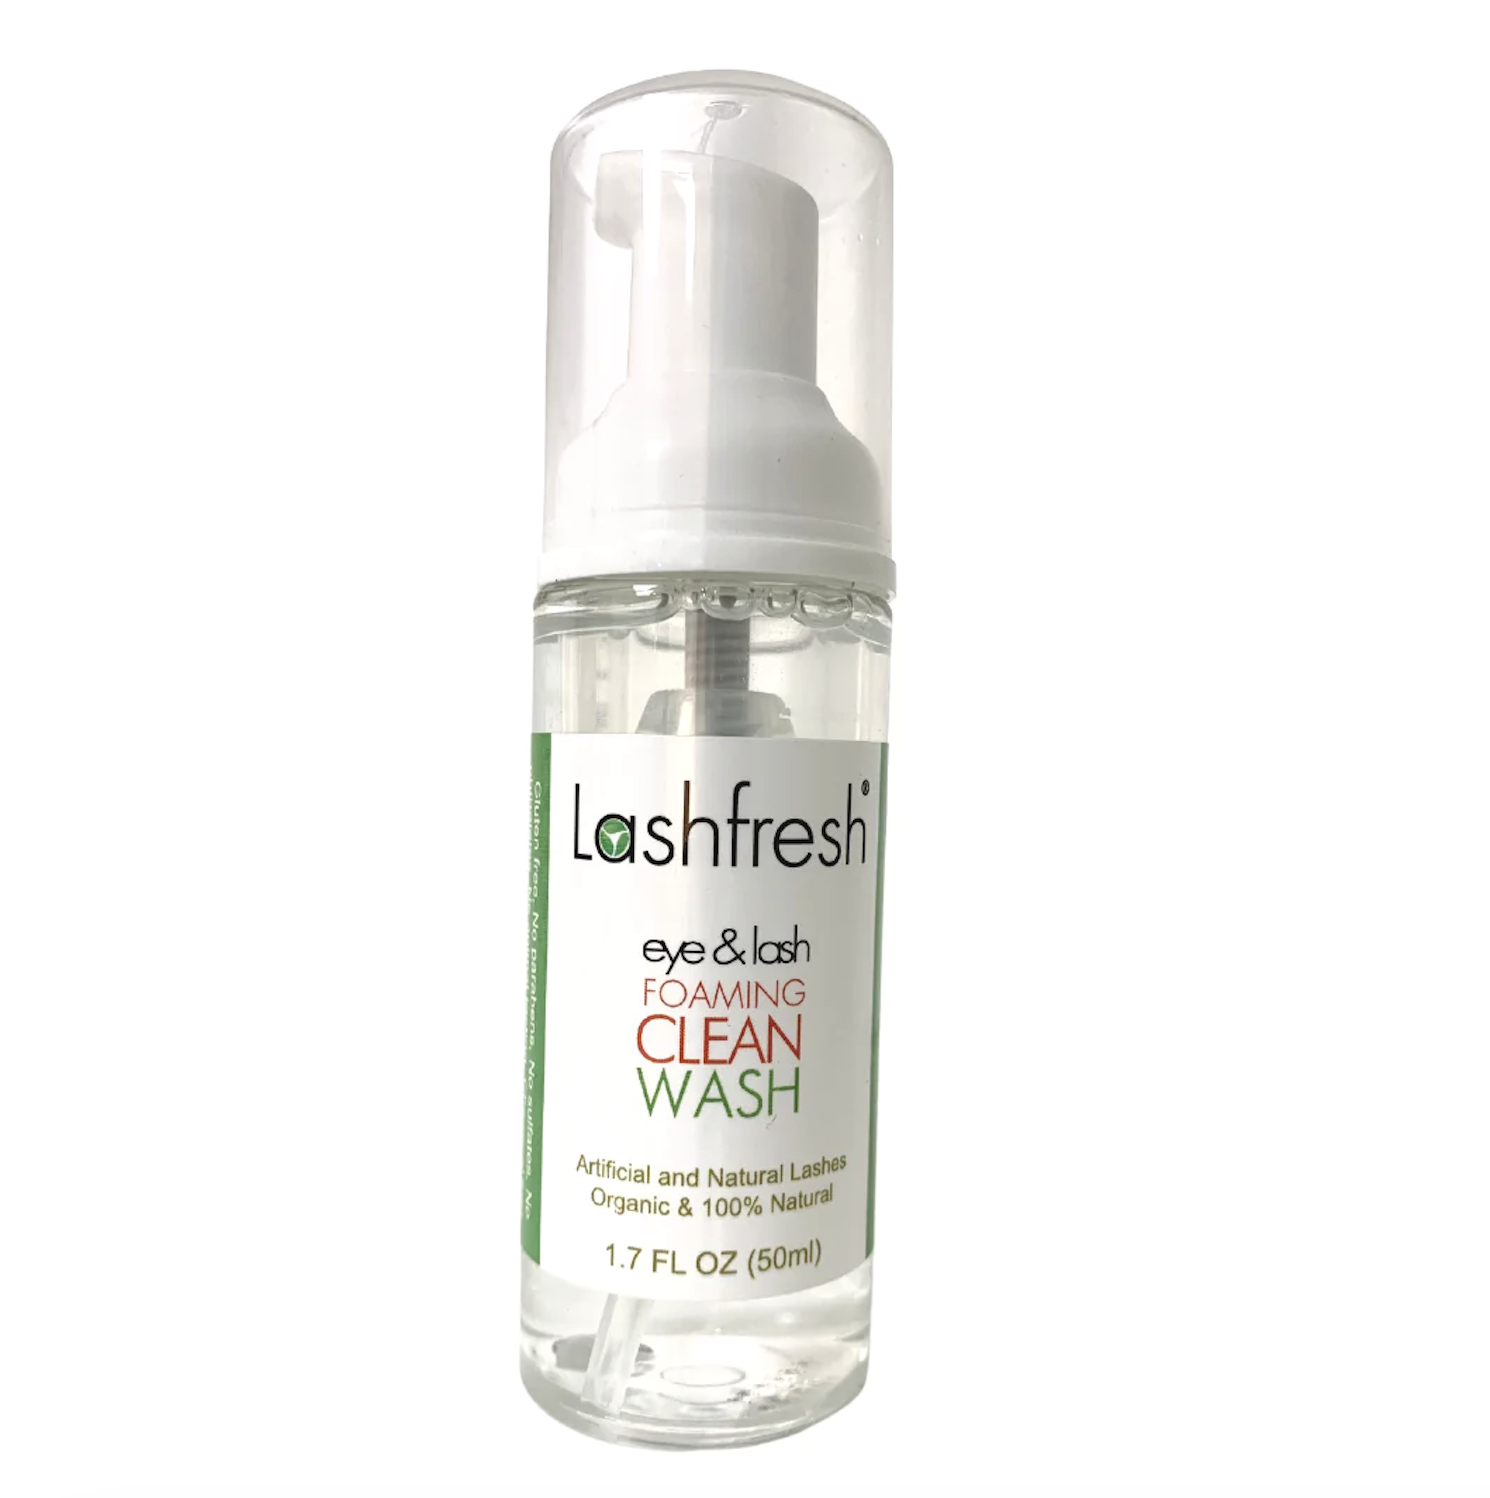 https://vanislebeautyco.com/products/lashfresh-foam-eyelash-wash-bglds?_pos=2&_sid=e304fc043&_ss=r